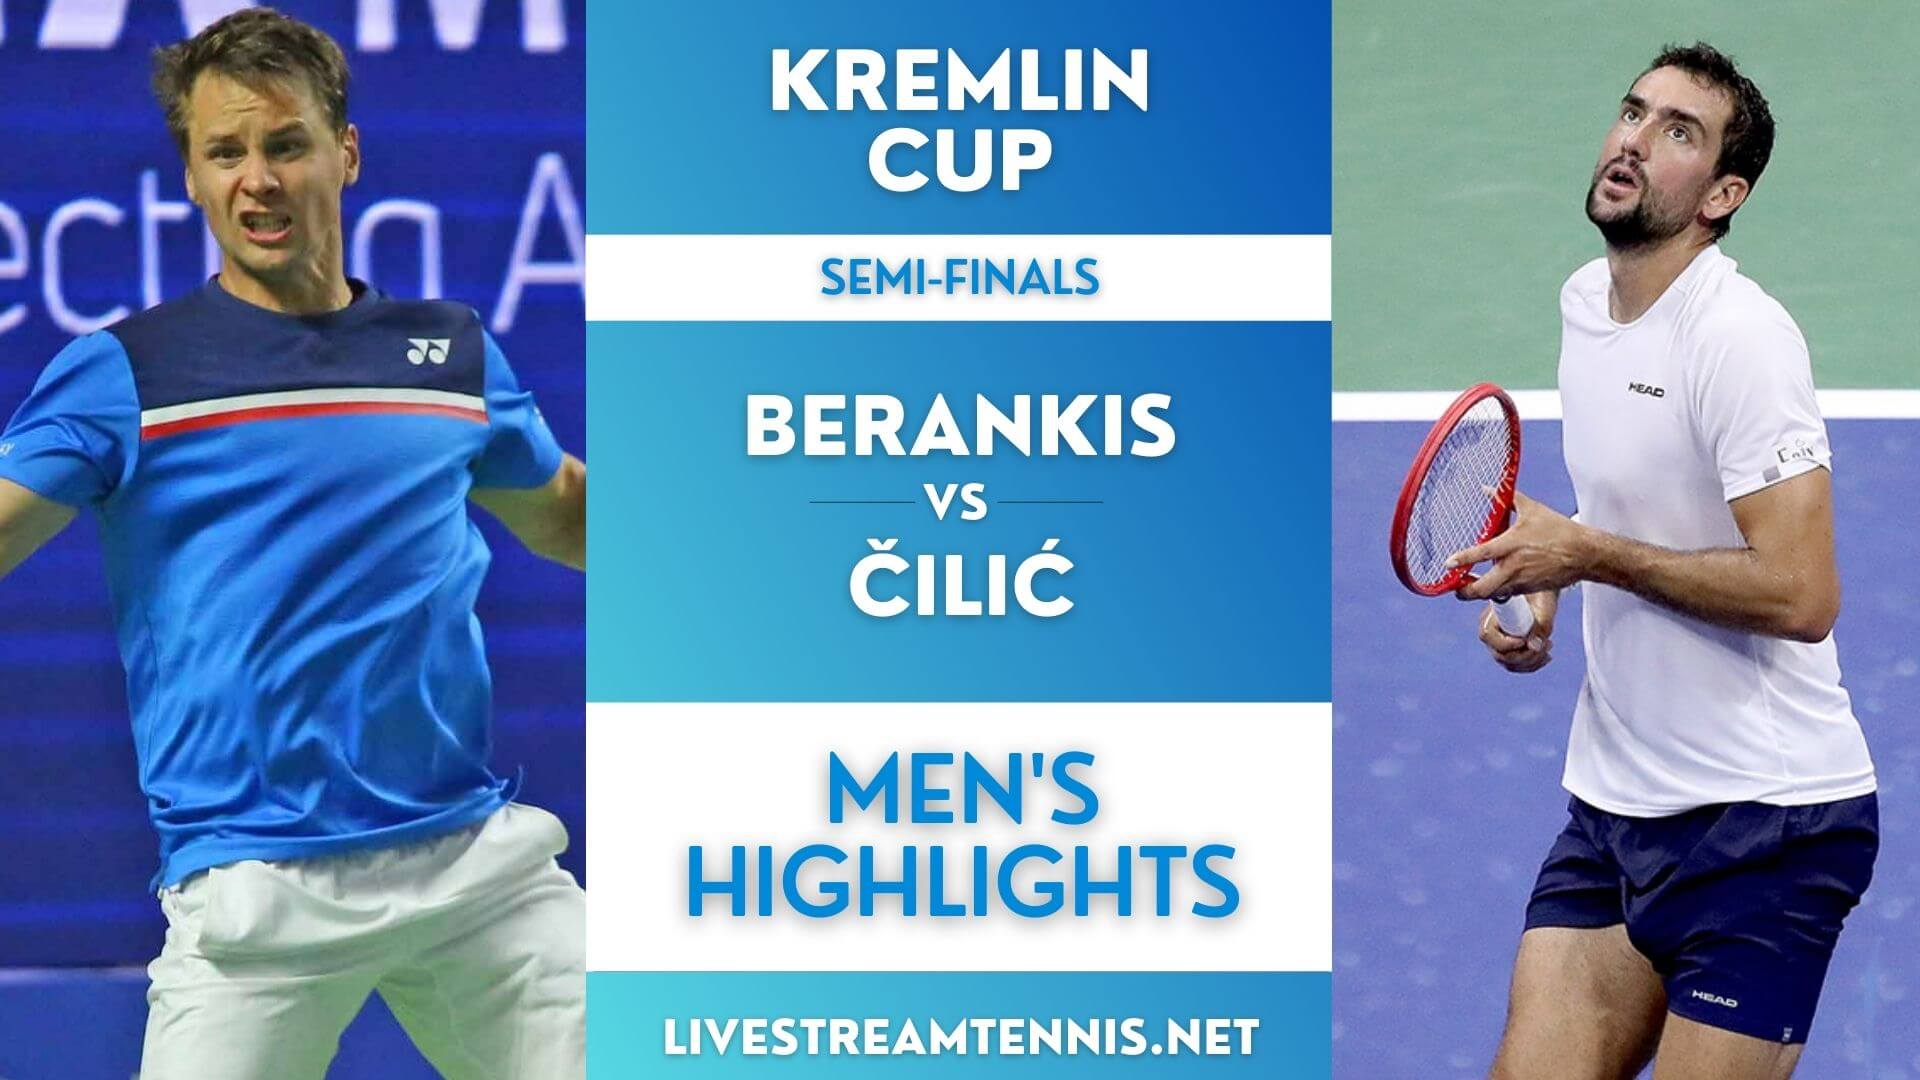 Kremlin Cup Men Semi Final 2 Highlights 2021